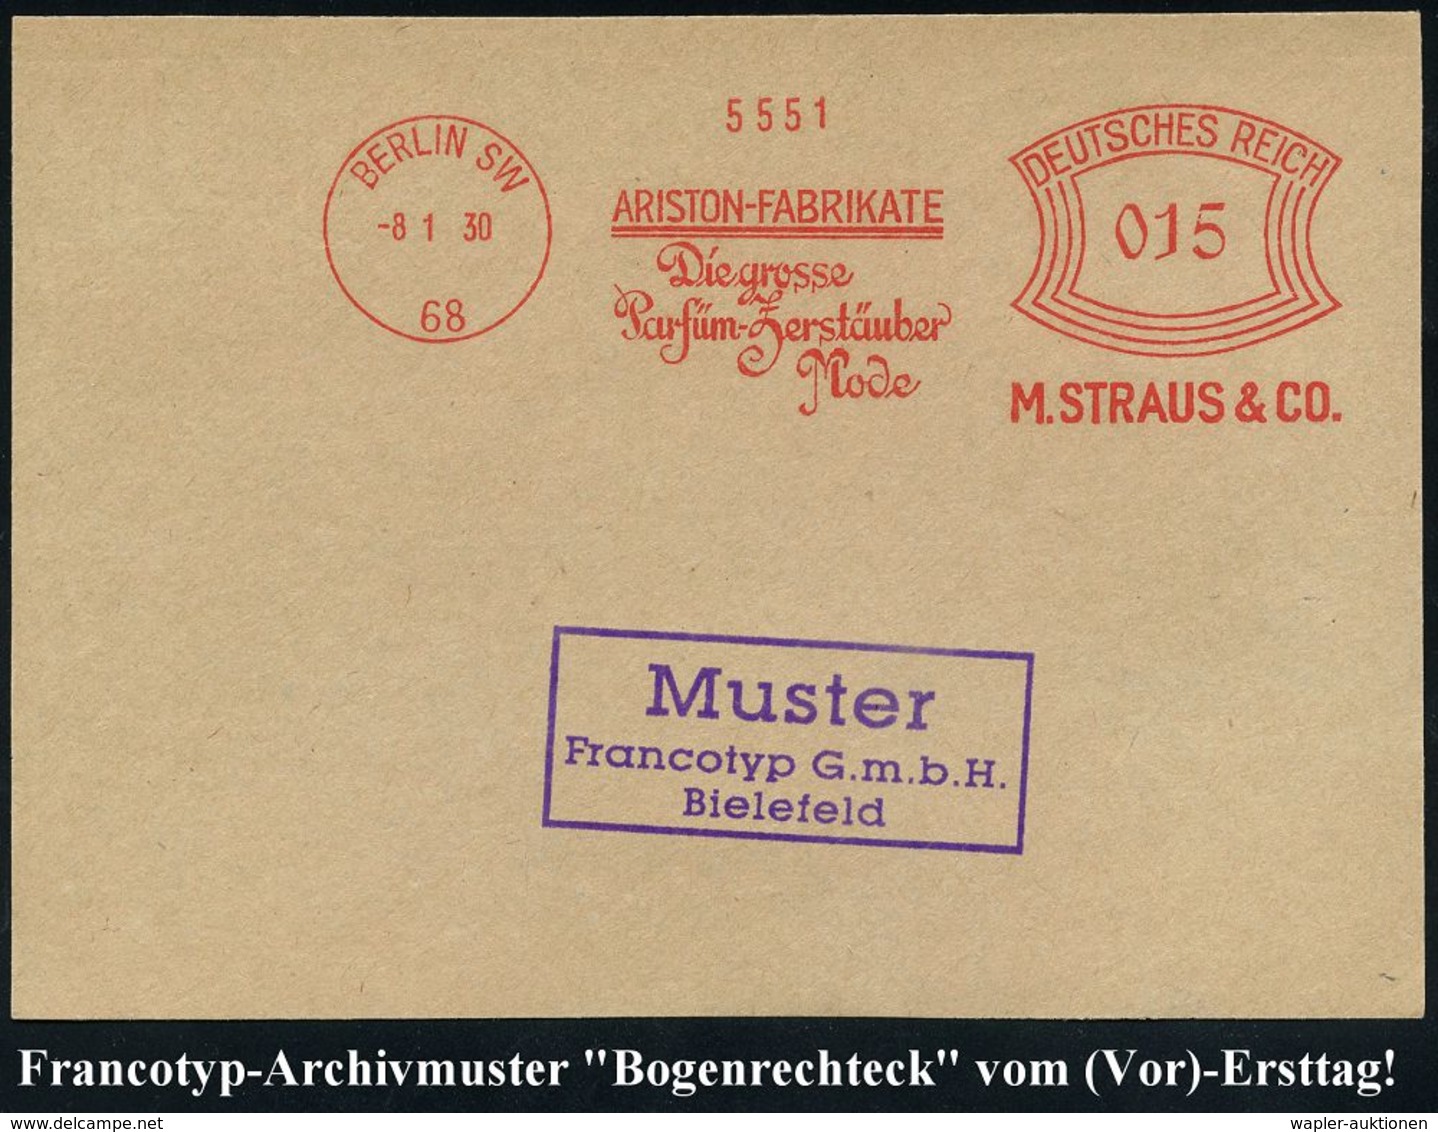 KOSMETIK / PARFÜM : BERLIN SW/ 68/ ARISTON-FABRIKATE/ ..Parfüm-Zerstäuber../ M.STRAUS & CO 1930 (8.1.) AFS, Francotyp-Ar - Pharmacie